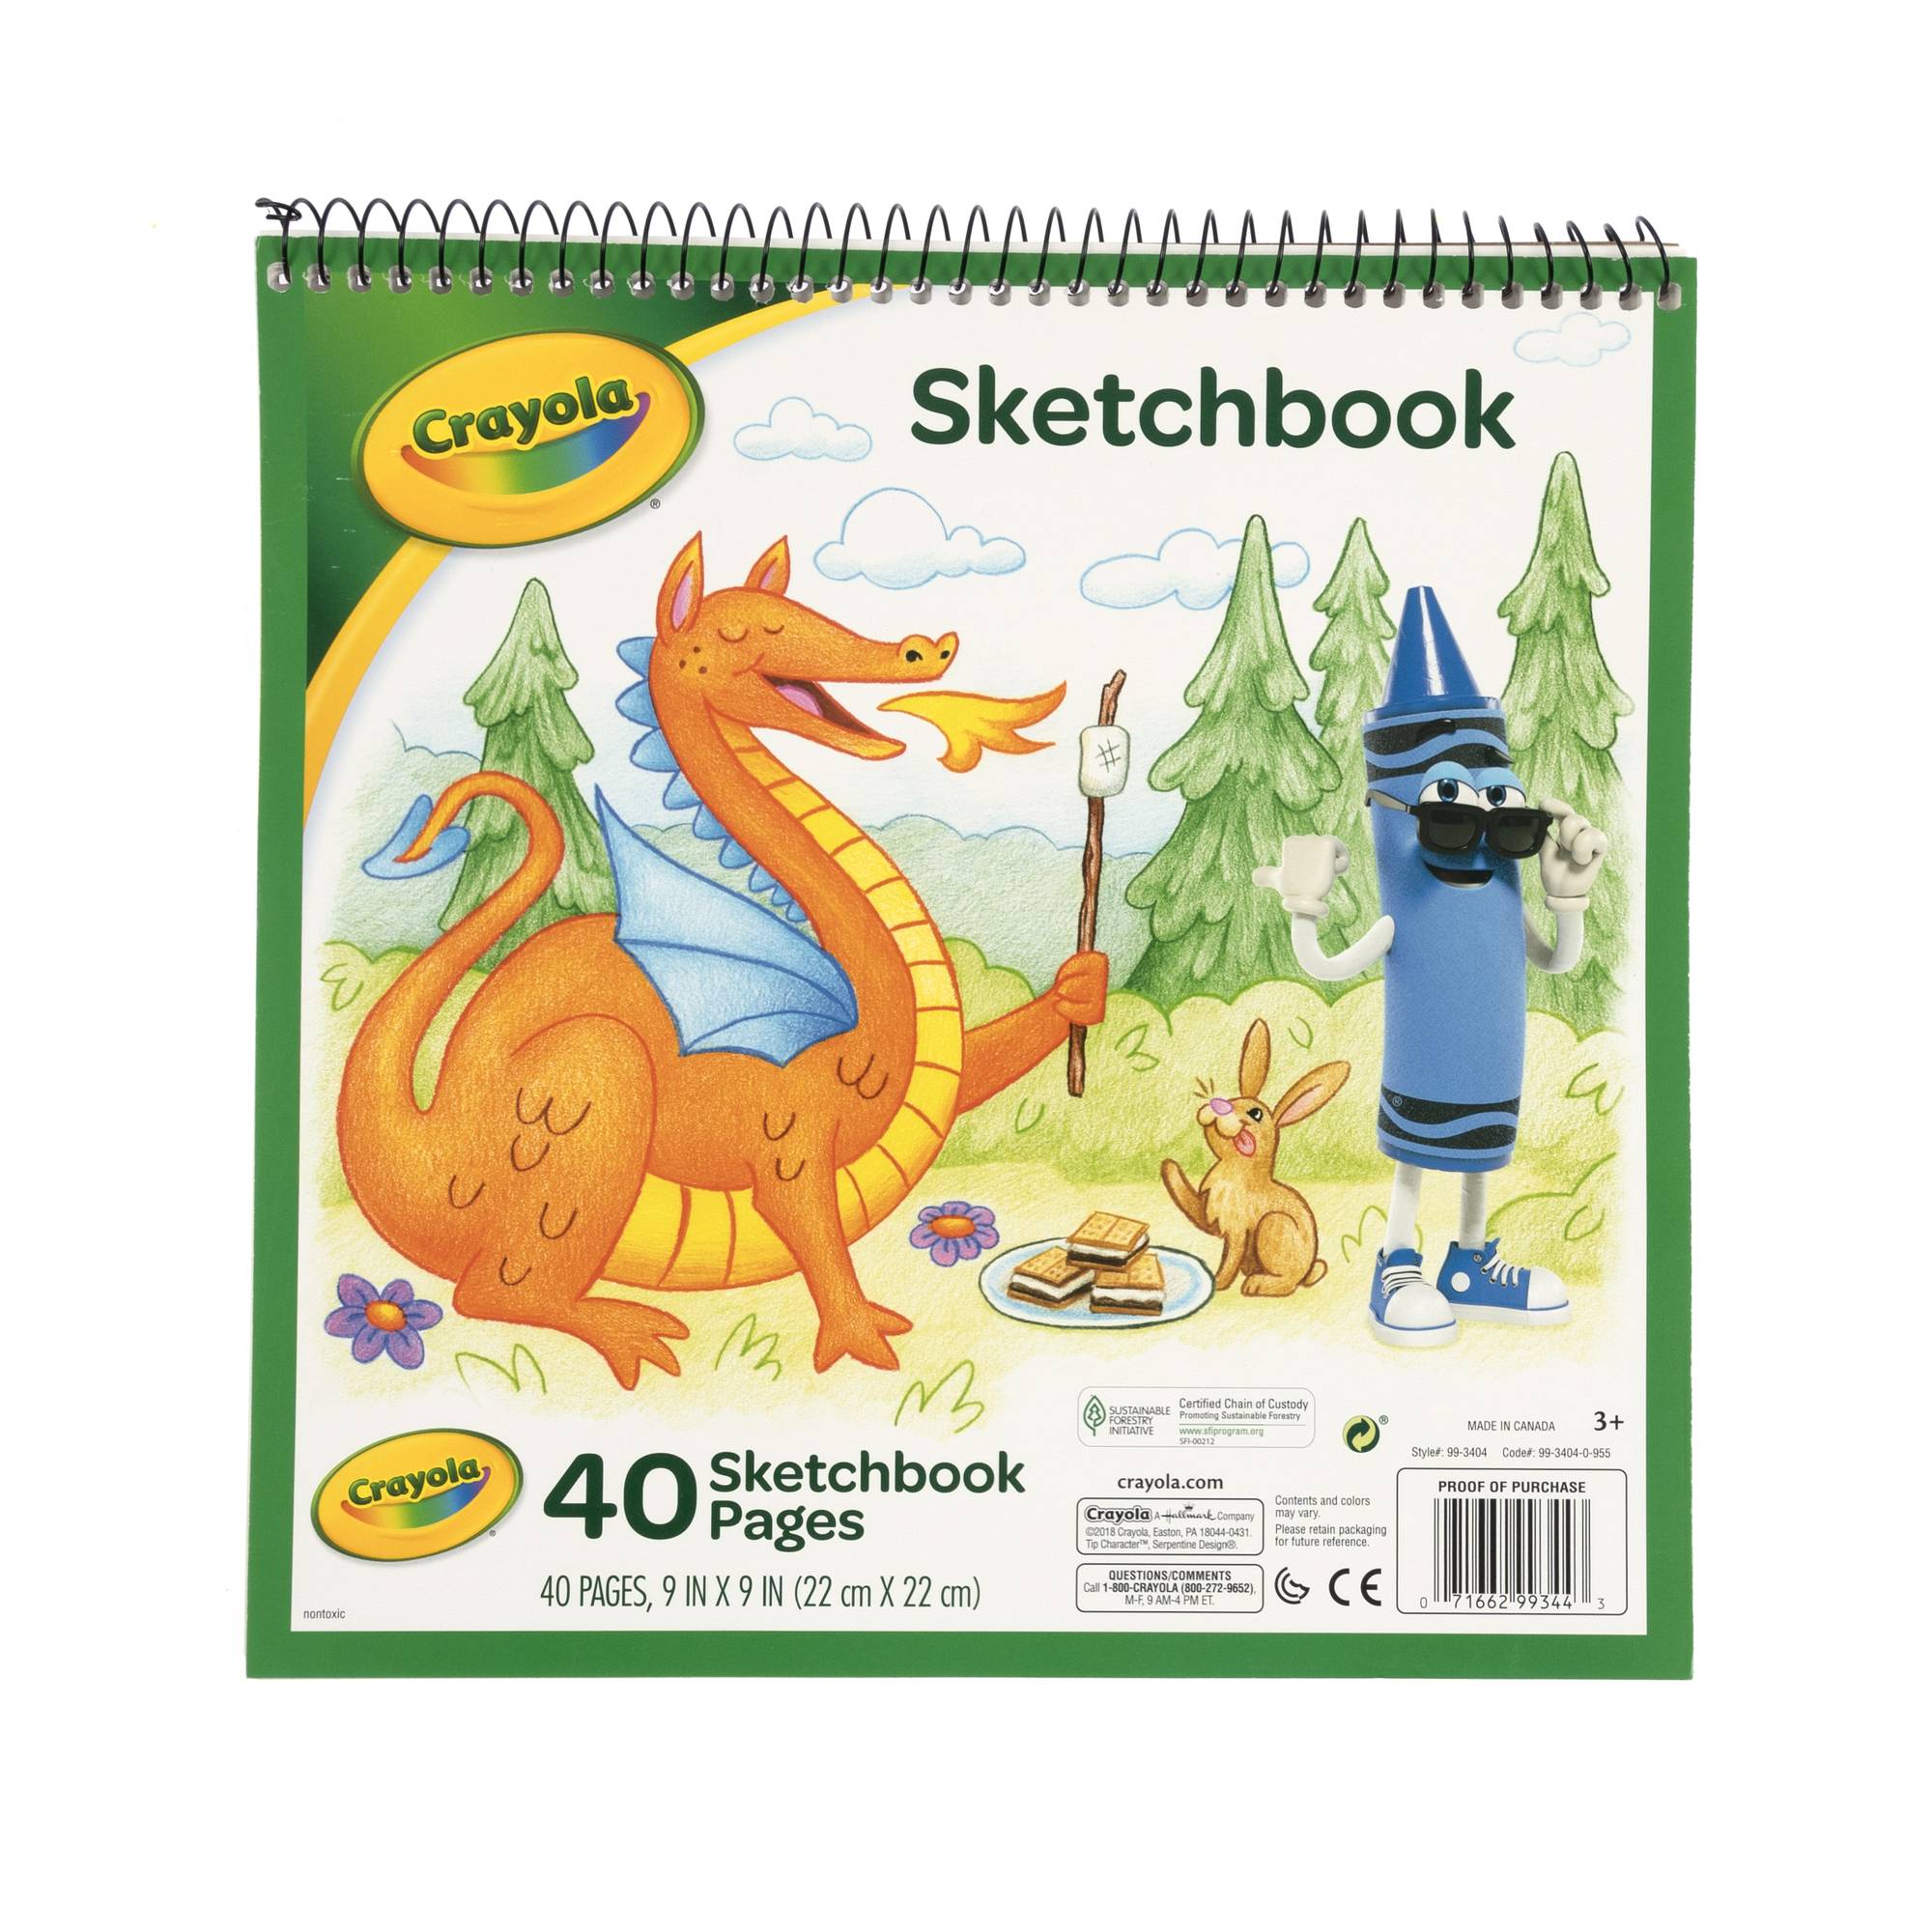 Crayola Sketchbook 9 x 9 Inches